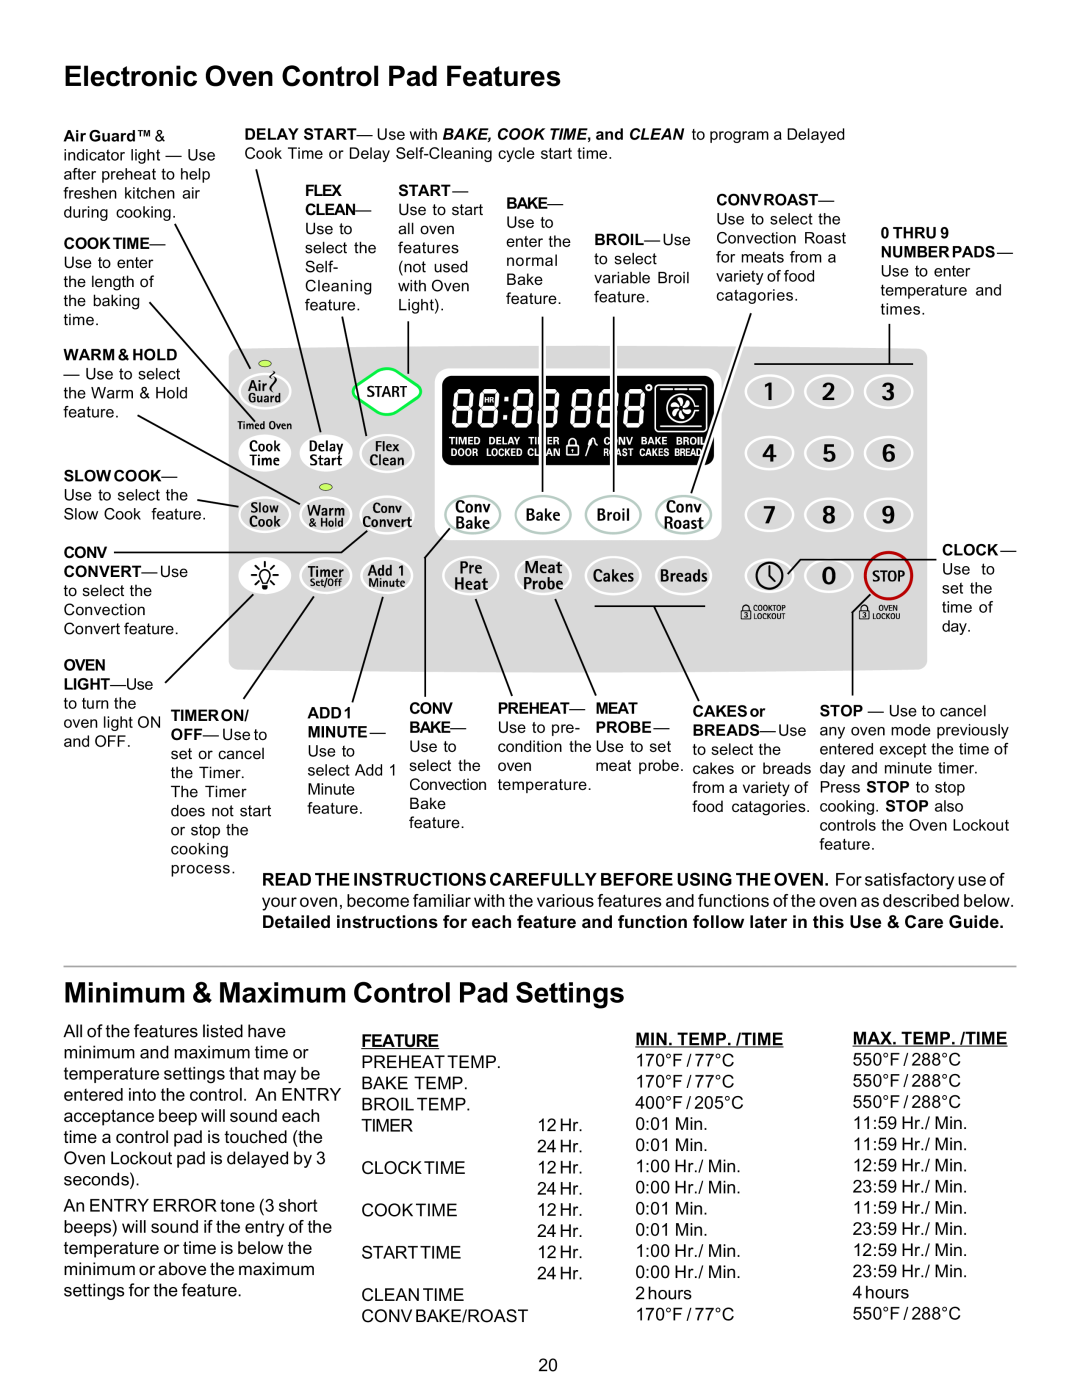 Kenmore 790-9663 manual Electronic Oven Control Pad Features, Minimum & Maximum Control Pad Settings, Min. Temp. /Time 